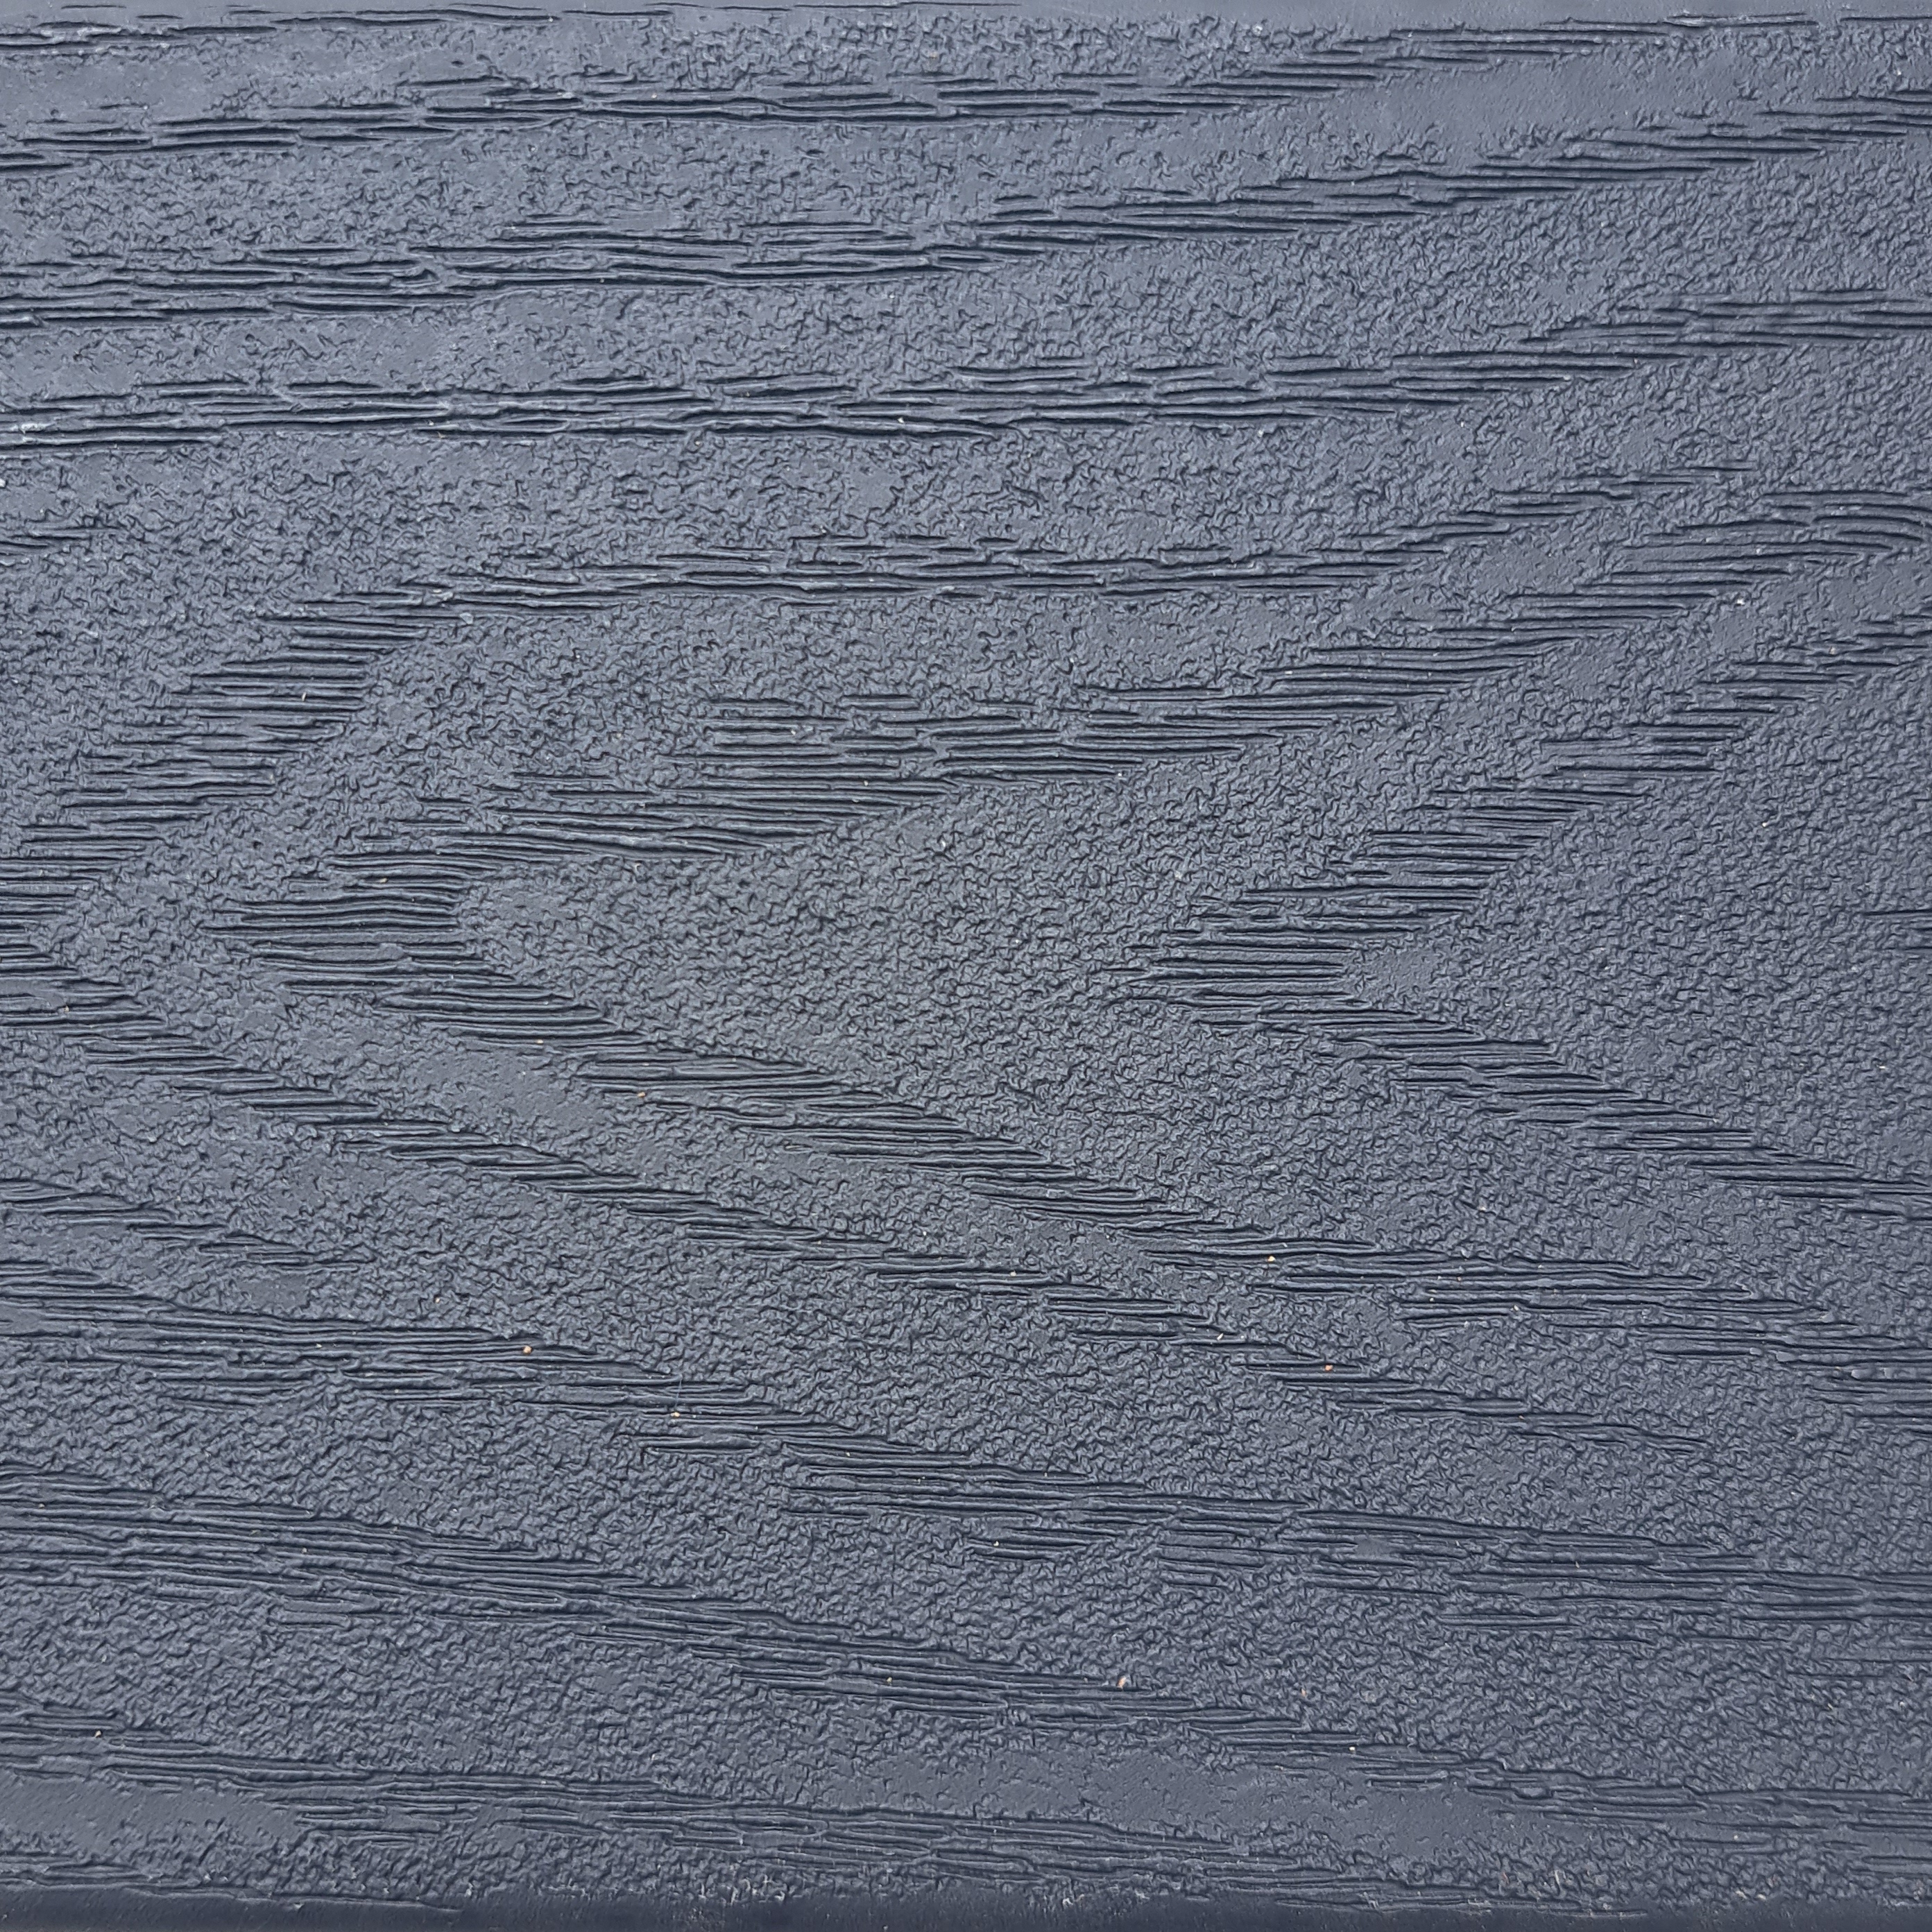 Texture of Trex Winchester Grey Decking